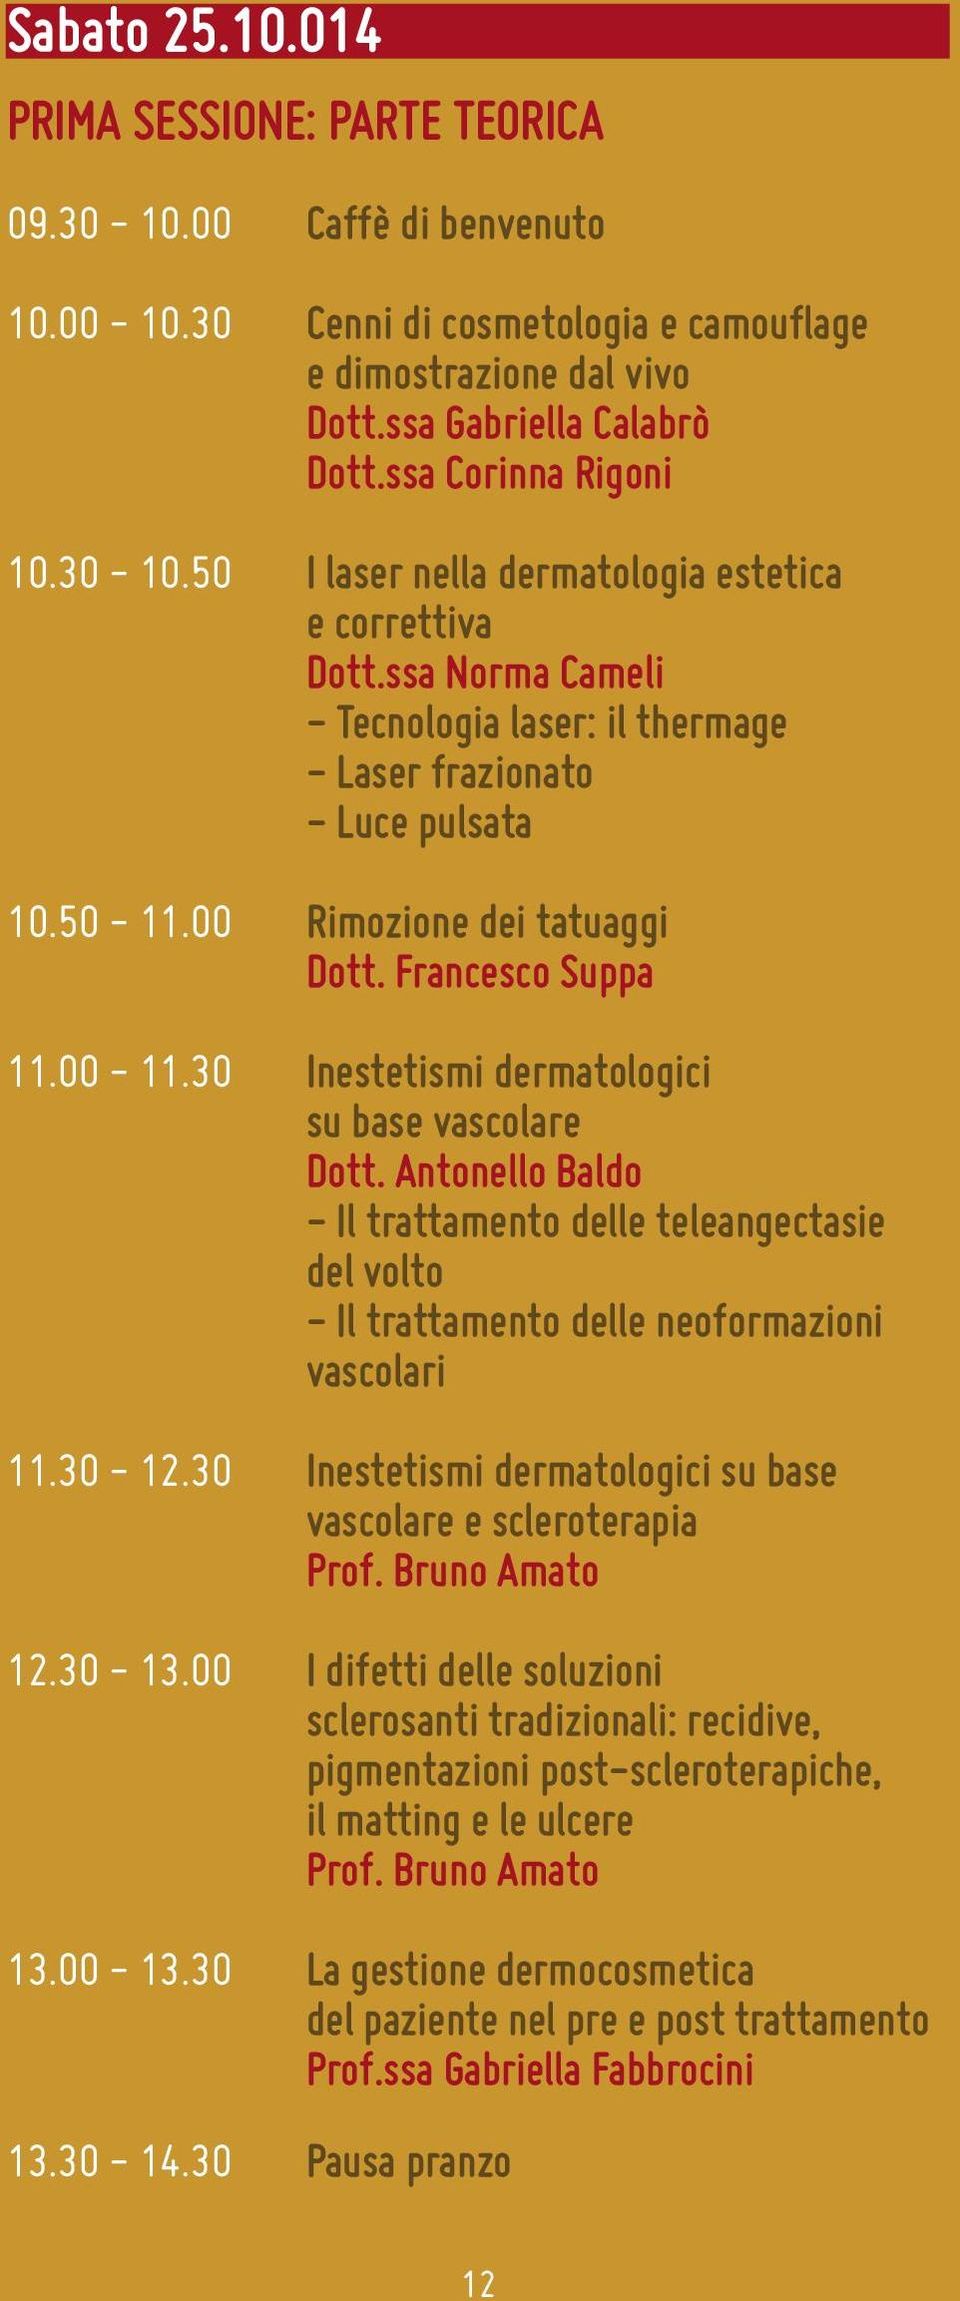 00 Rimozione dei tatuaggi Dott. Francesco Suppa 11.00-11.30 Inestetismi dermatologici su base vascolare Dott.